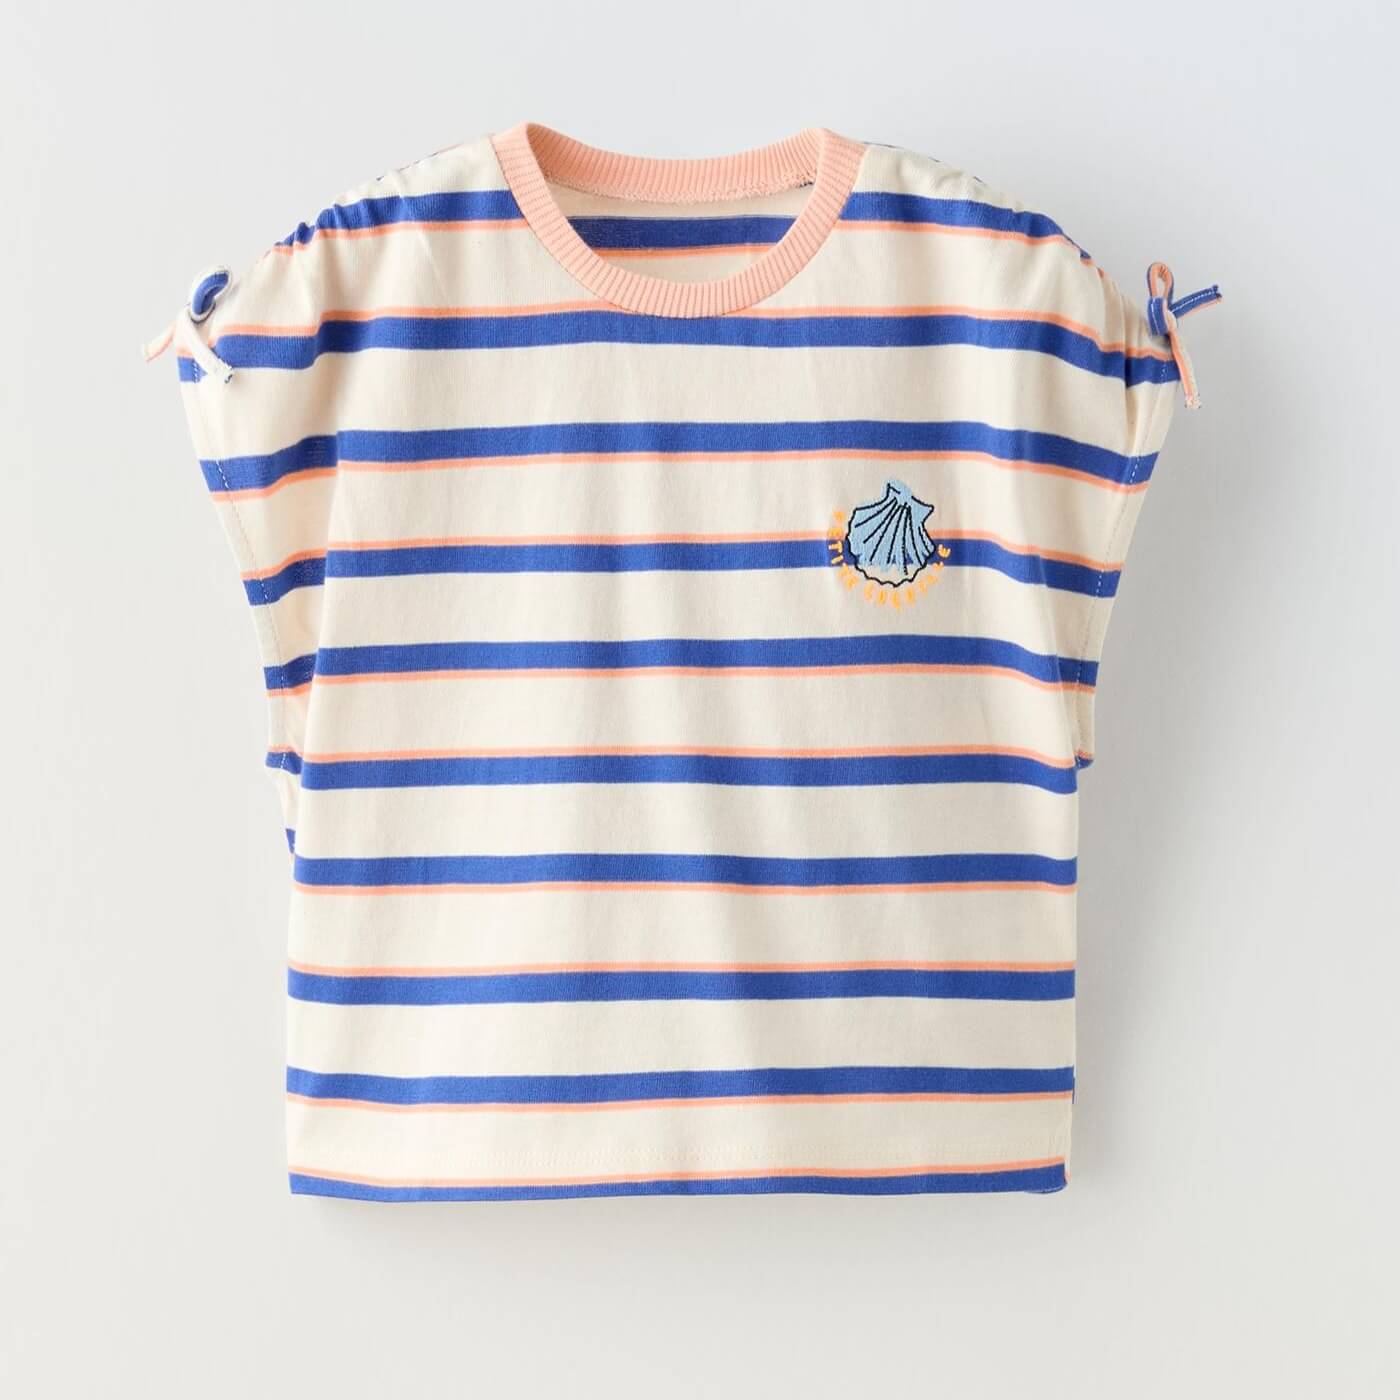 Футболка Zara Summer Camp Striped Embroidered Bows, синий/бежевый